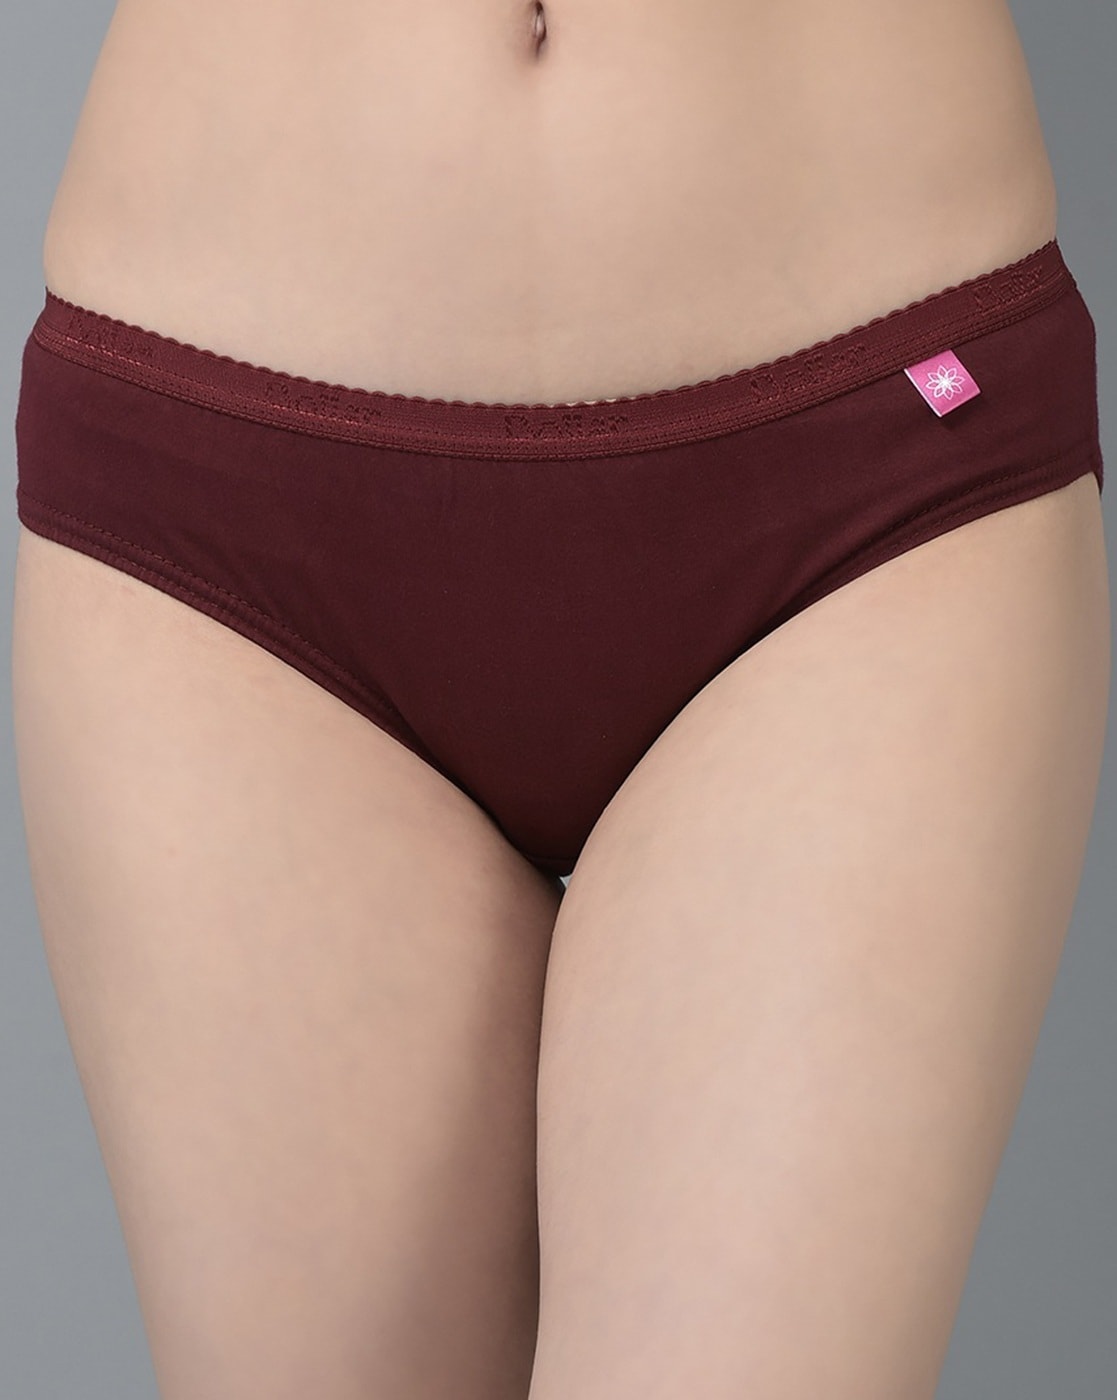 Wholesale Women's Hip Hugger Panties in 6 Colors - DollarDays